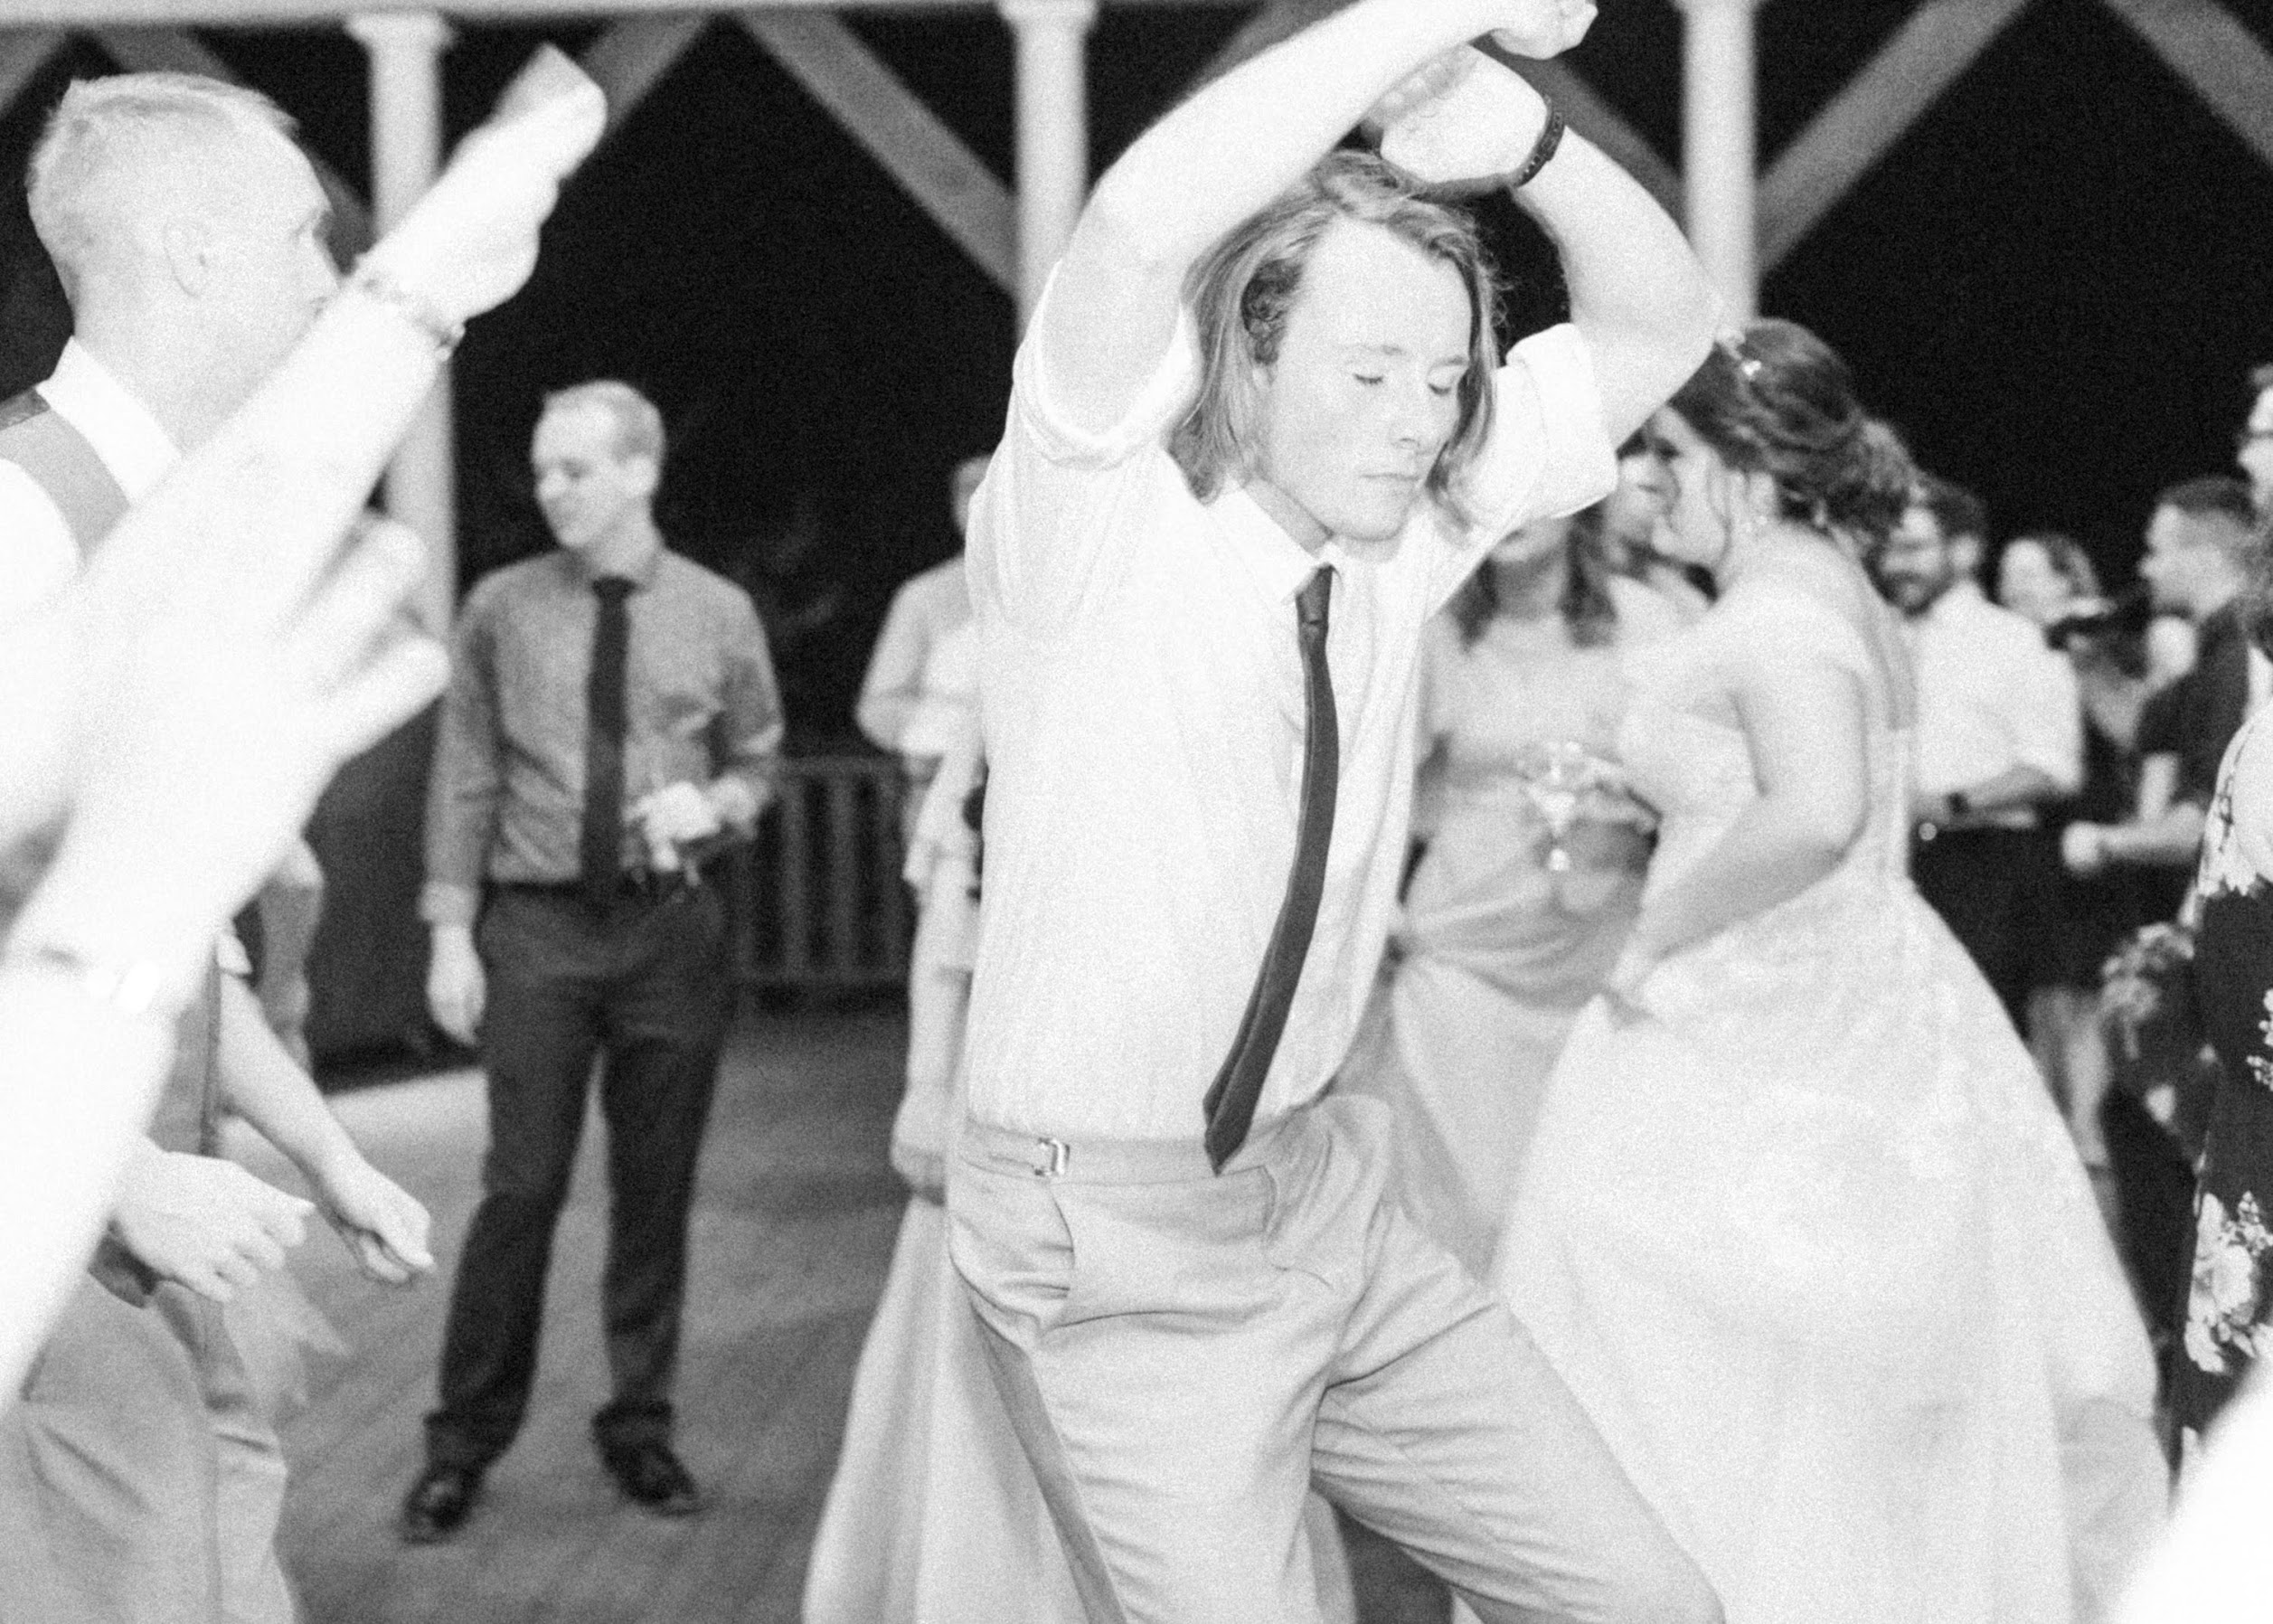 Gus dancing at Mike's wedding